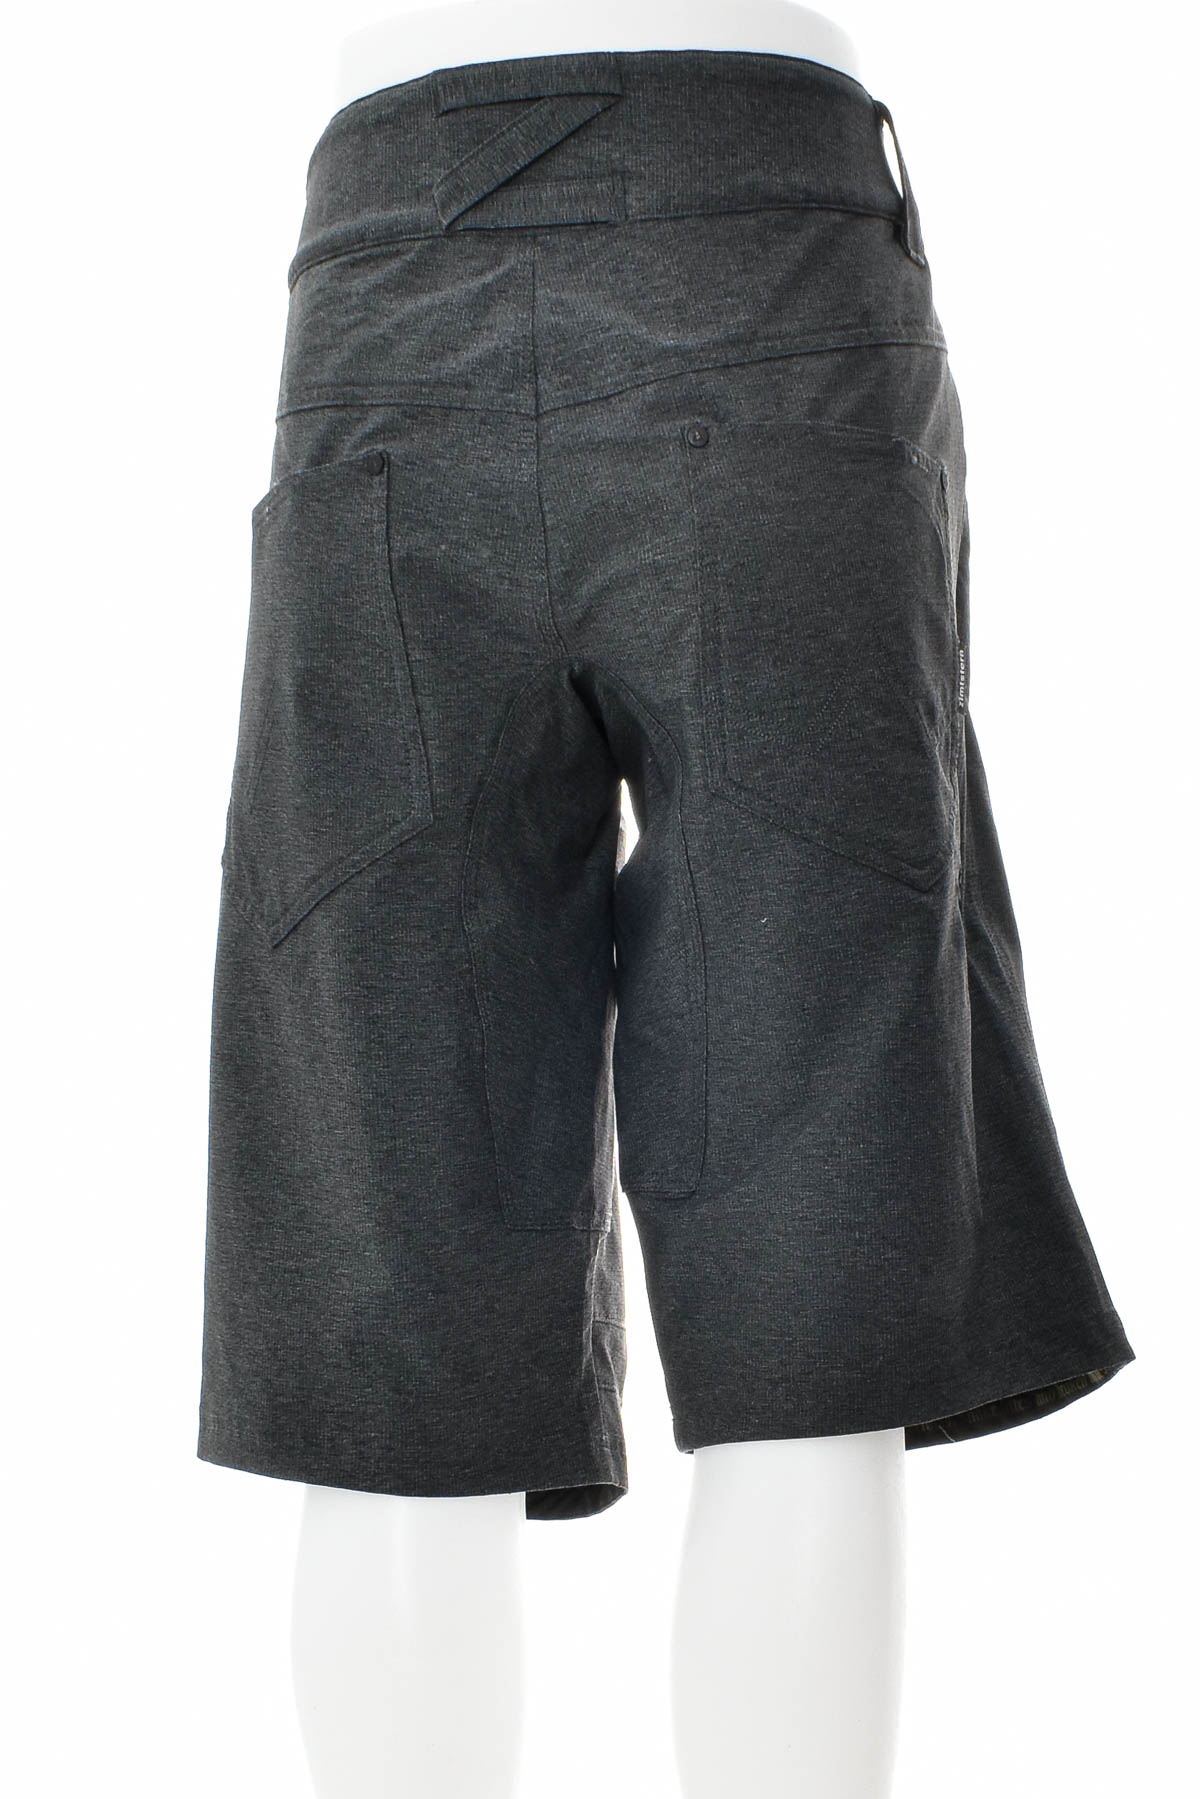 Men's shorts - Zimtstern - 1